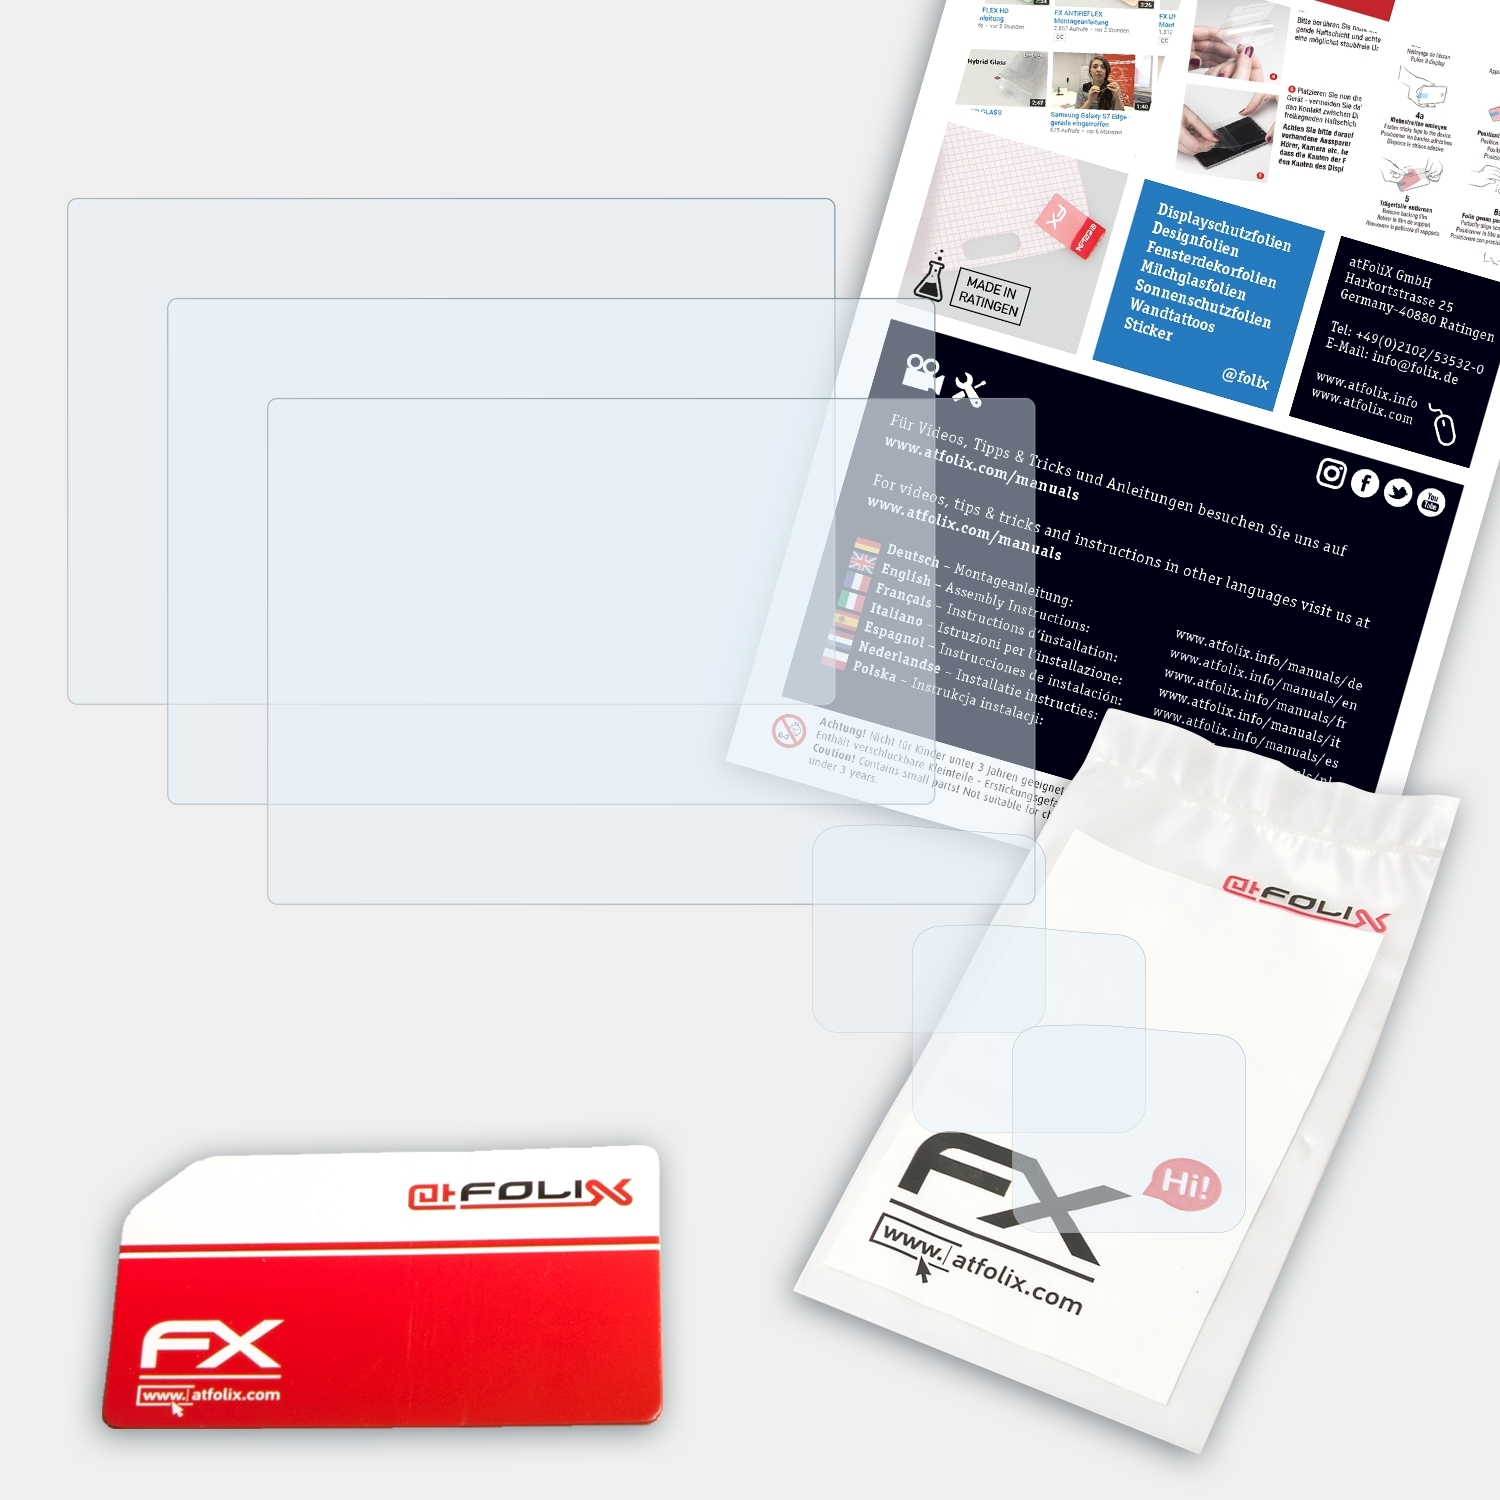 Displayschutz(für III) FX-Clear Ricoh Pentax 3x ATFOLIX K-3 Mark